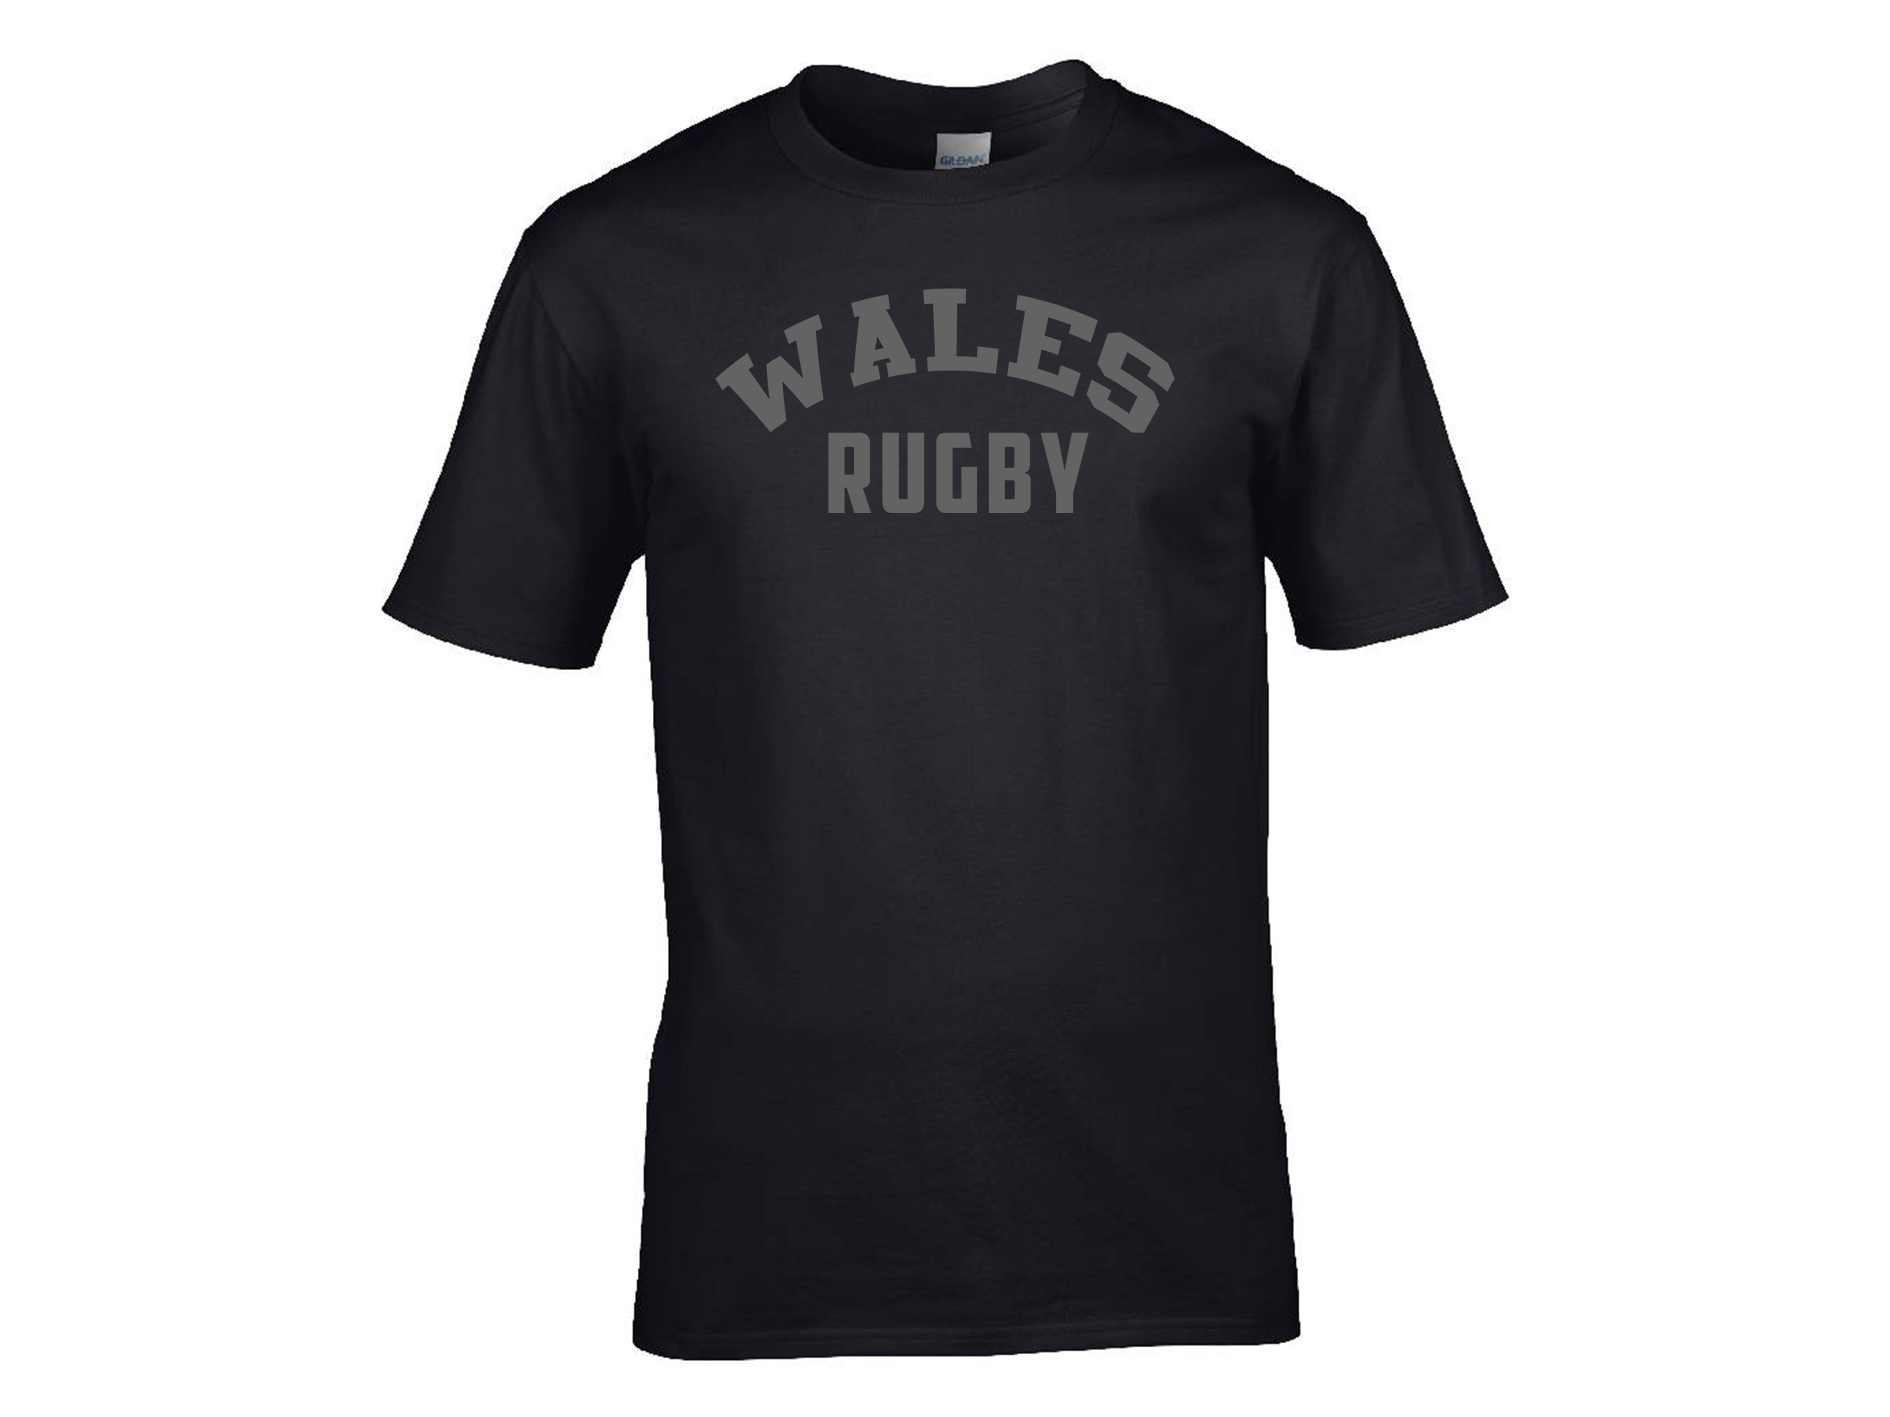 Rugby | Wales Rugby | Black